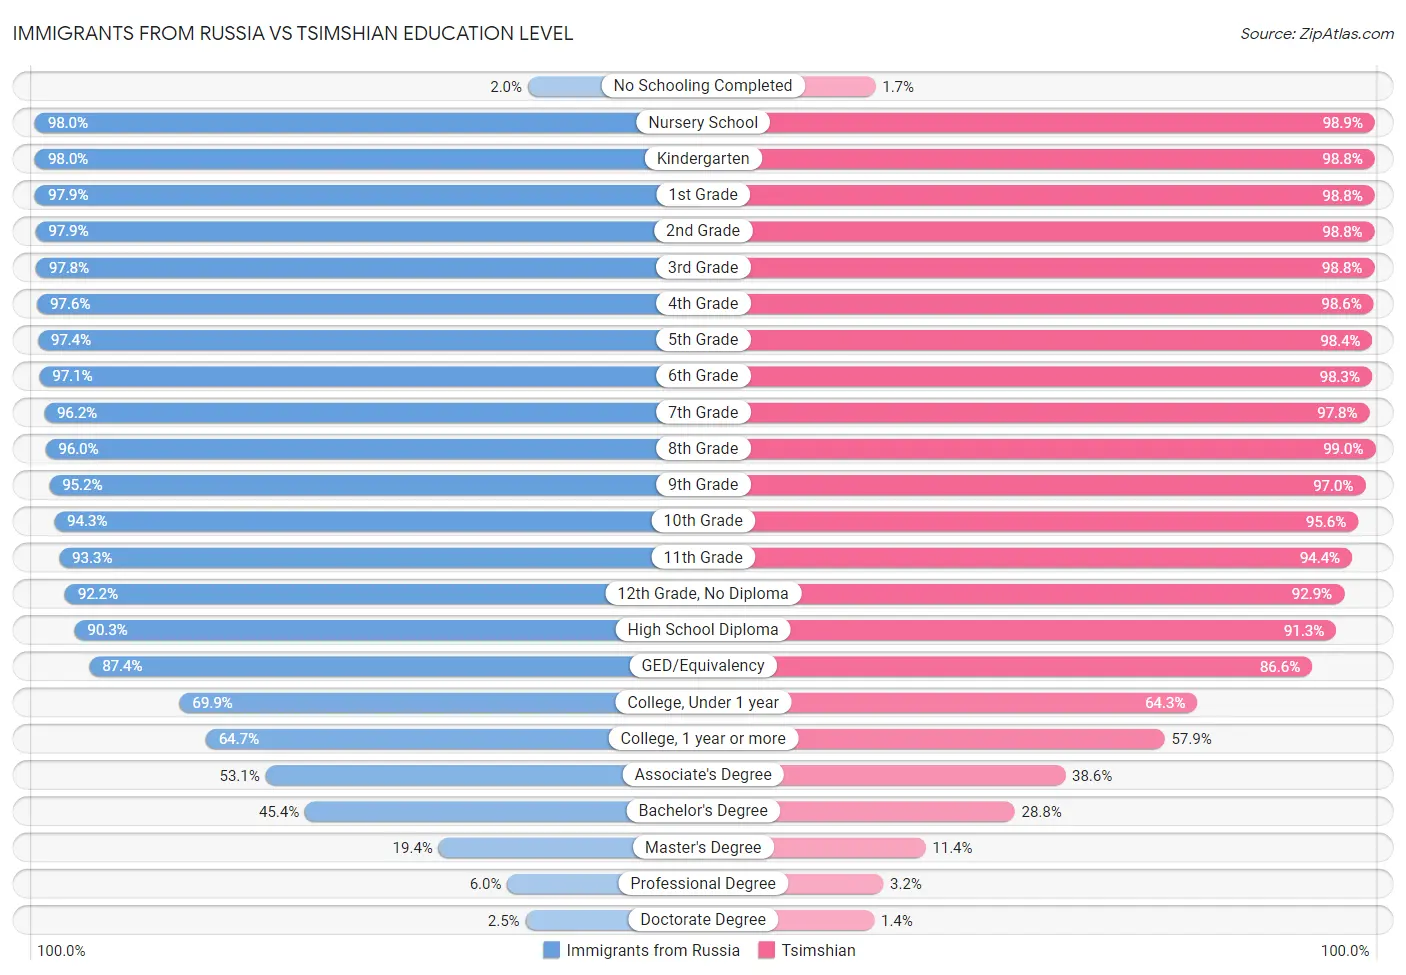 Immigrants from Russia vs Tsimshian Education Level